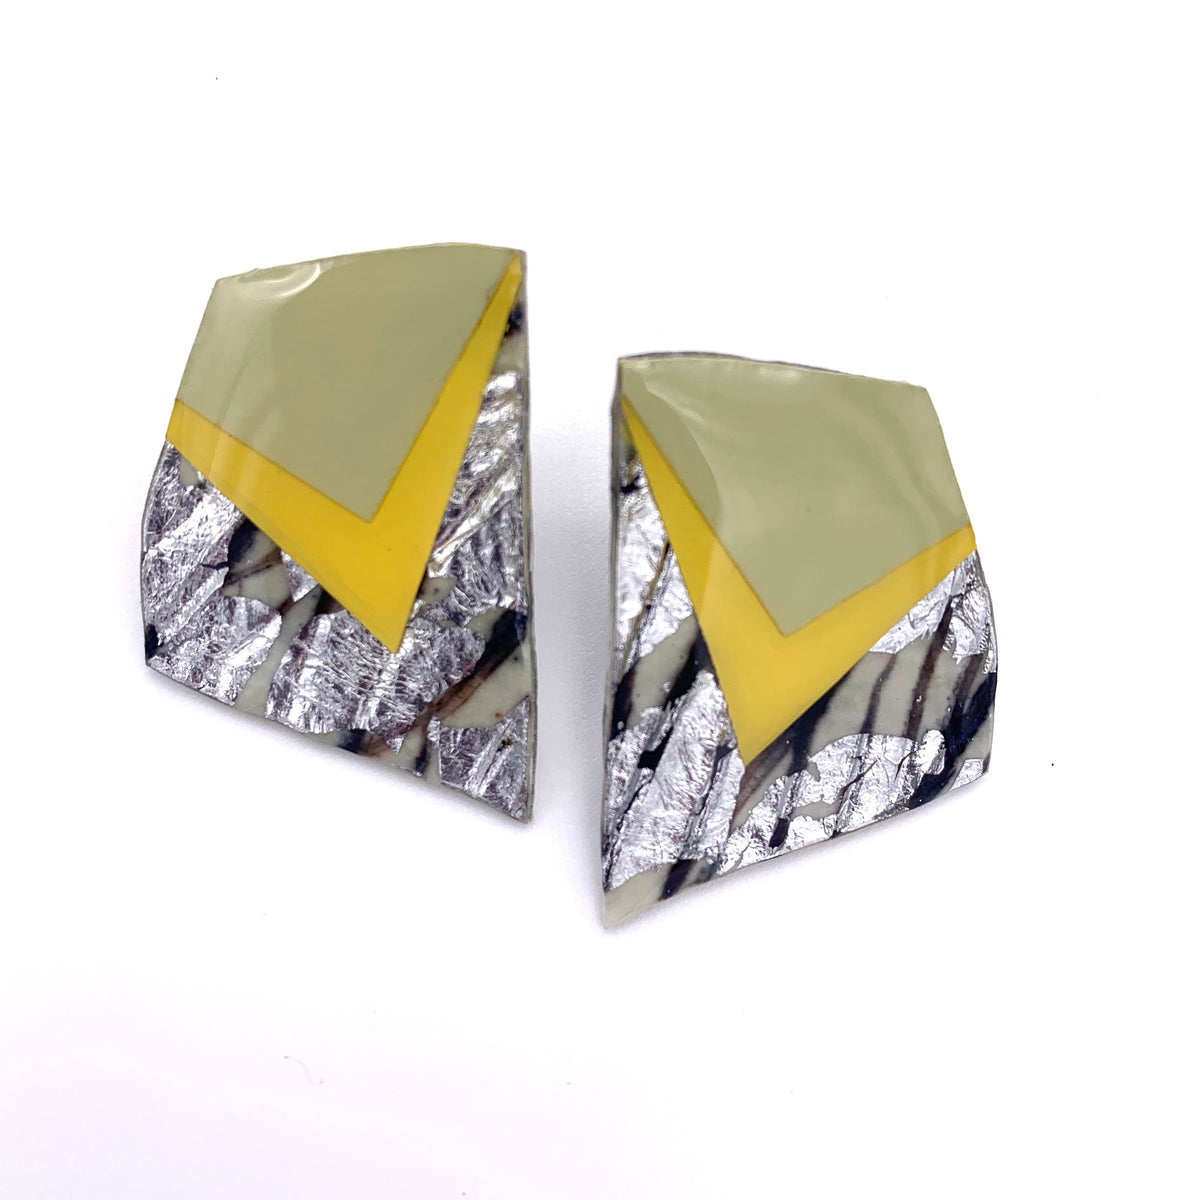 Earrach sgraffito earrings in silver/grey/yellow/sage